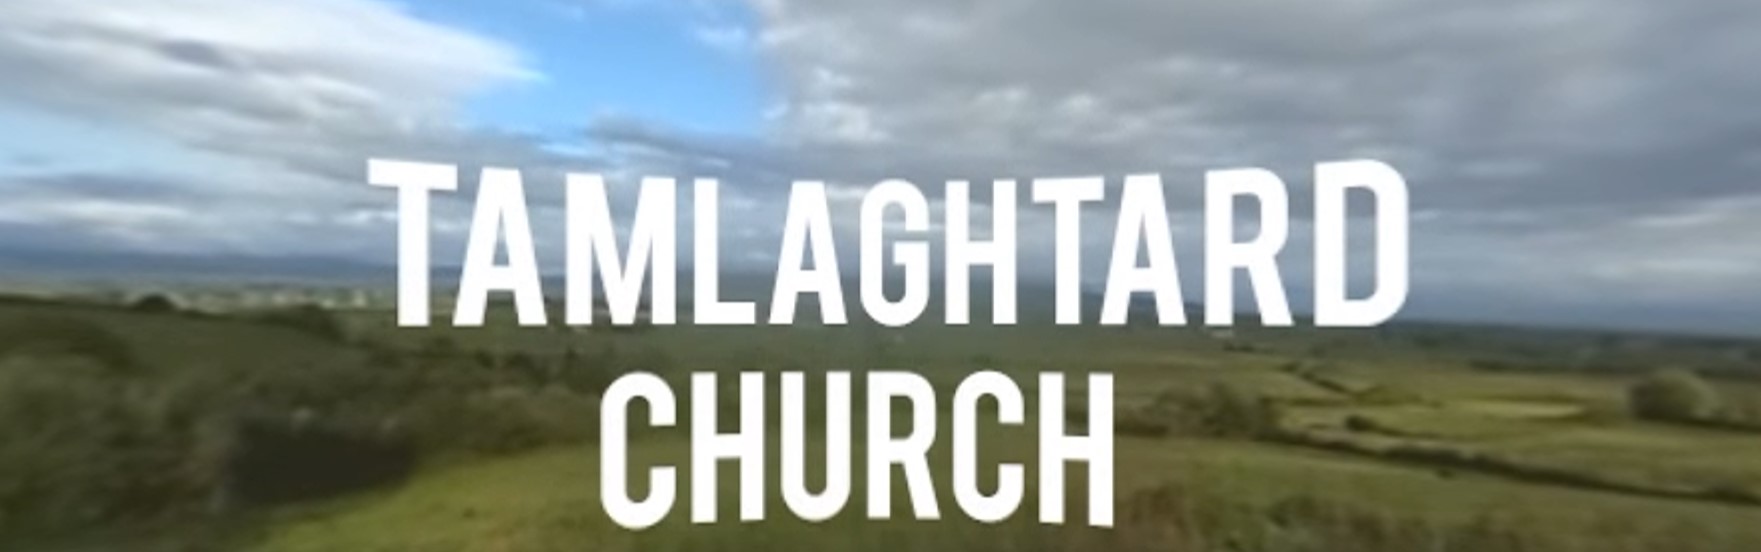 360 Degree Video of Tamlaghtard Church, Limavady